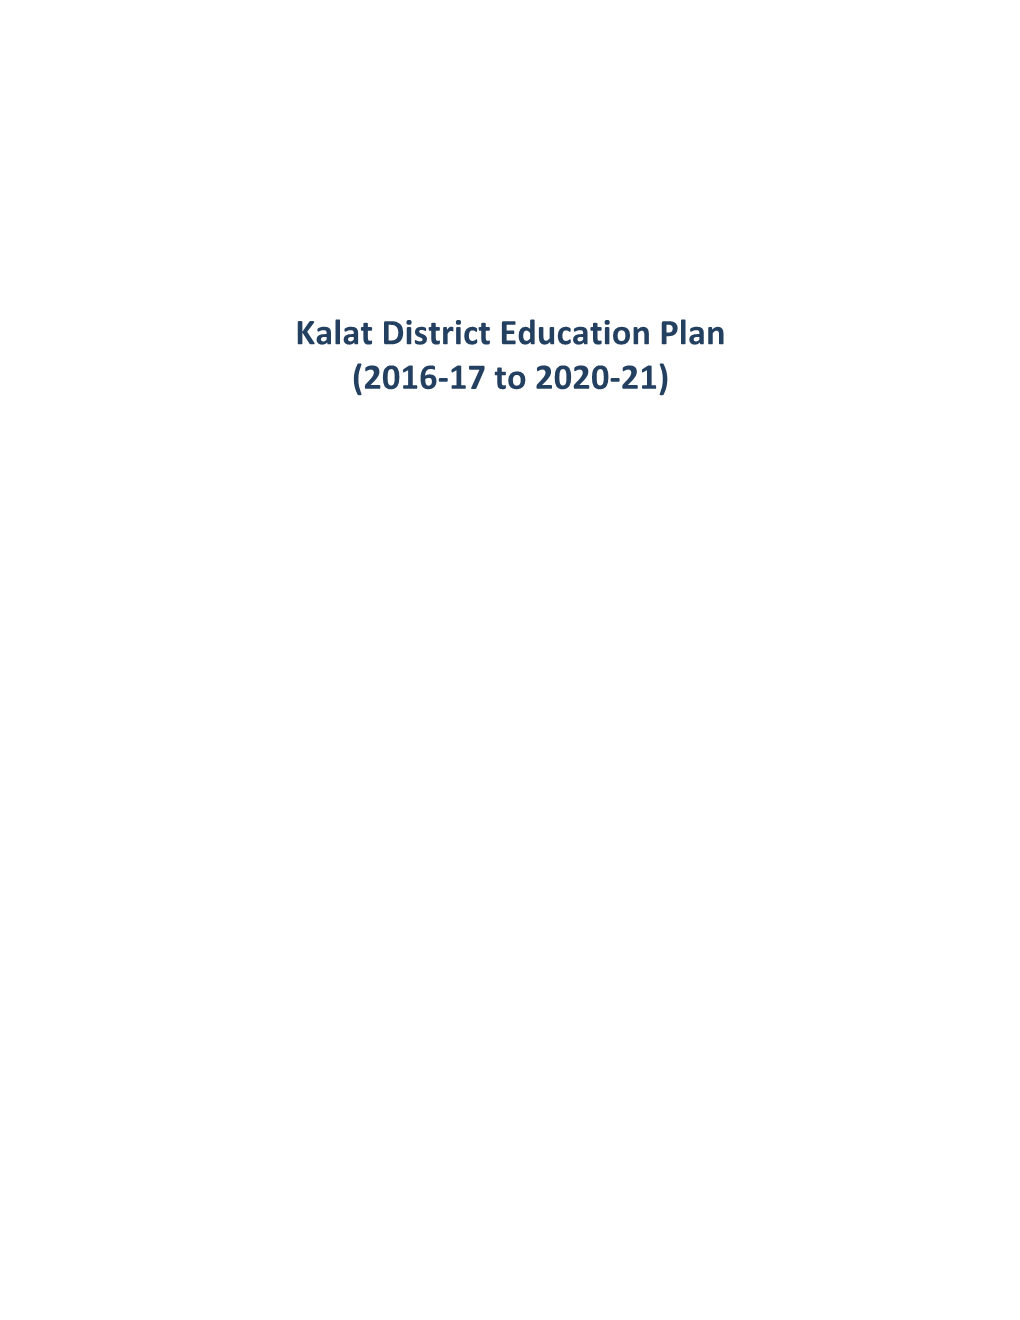 Kalat District Education Plan (2016-17 to 2020-21)